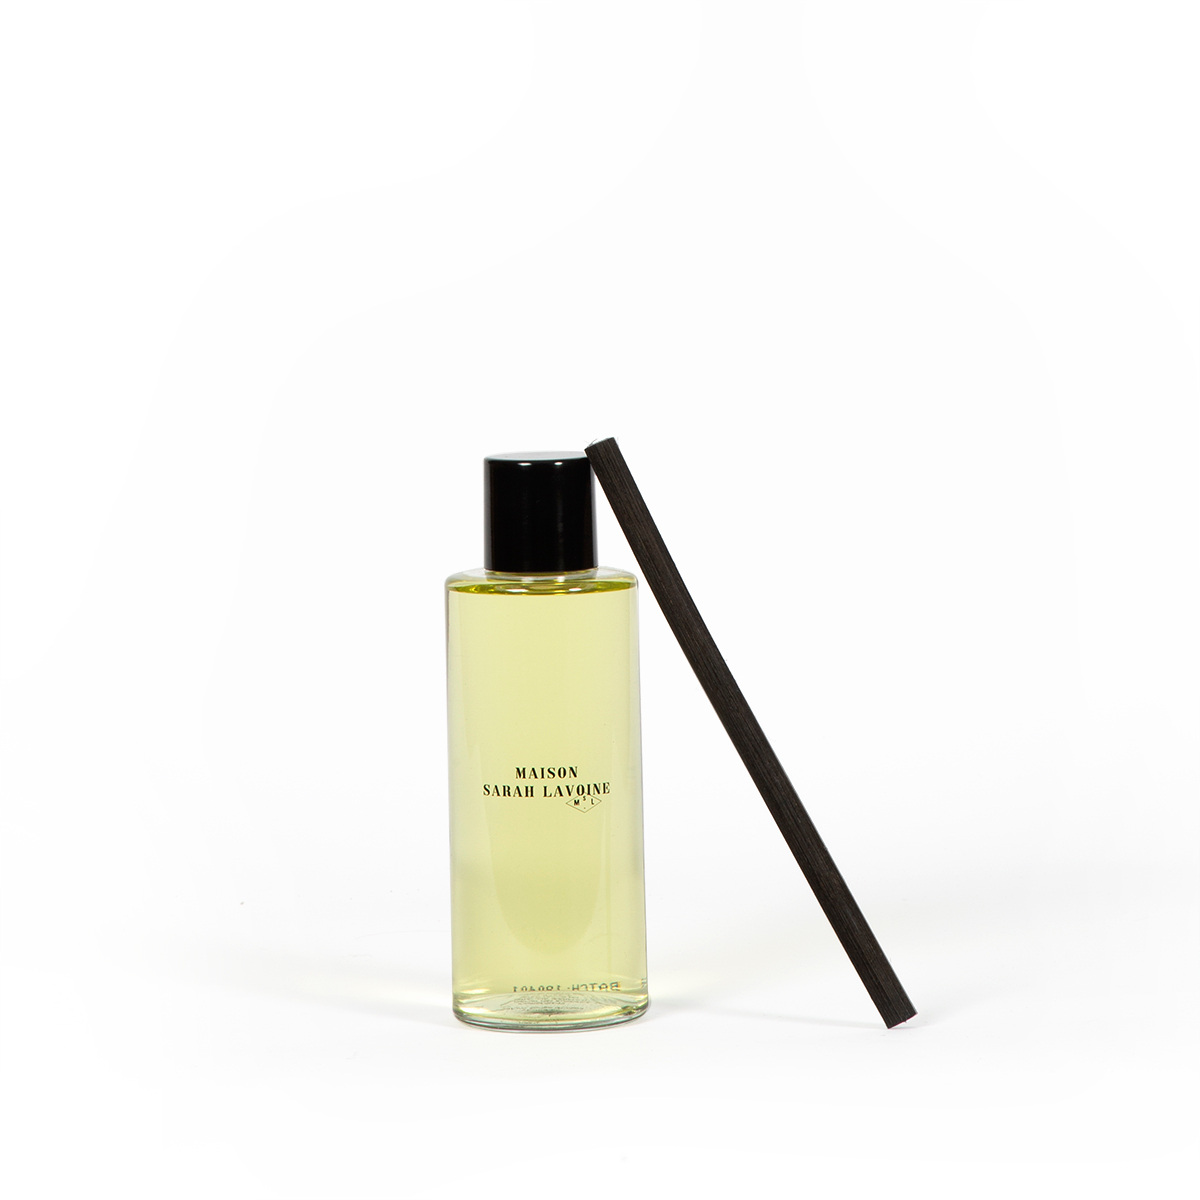 Perfume Refills, Scent - Glass / Wooden Stem - image 1